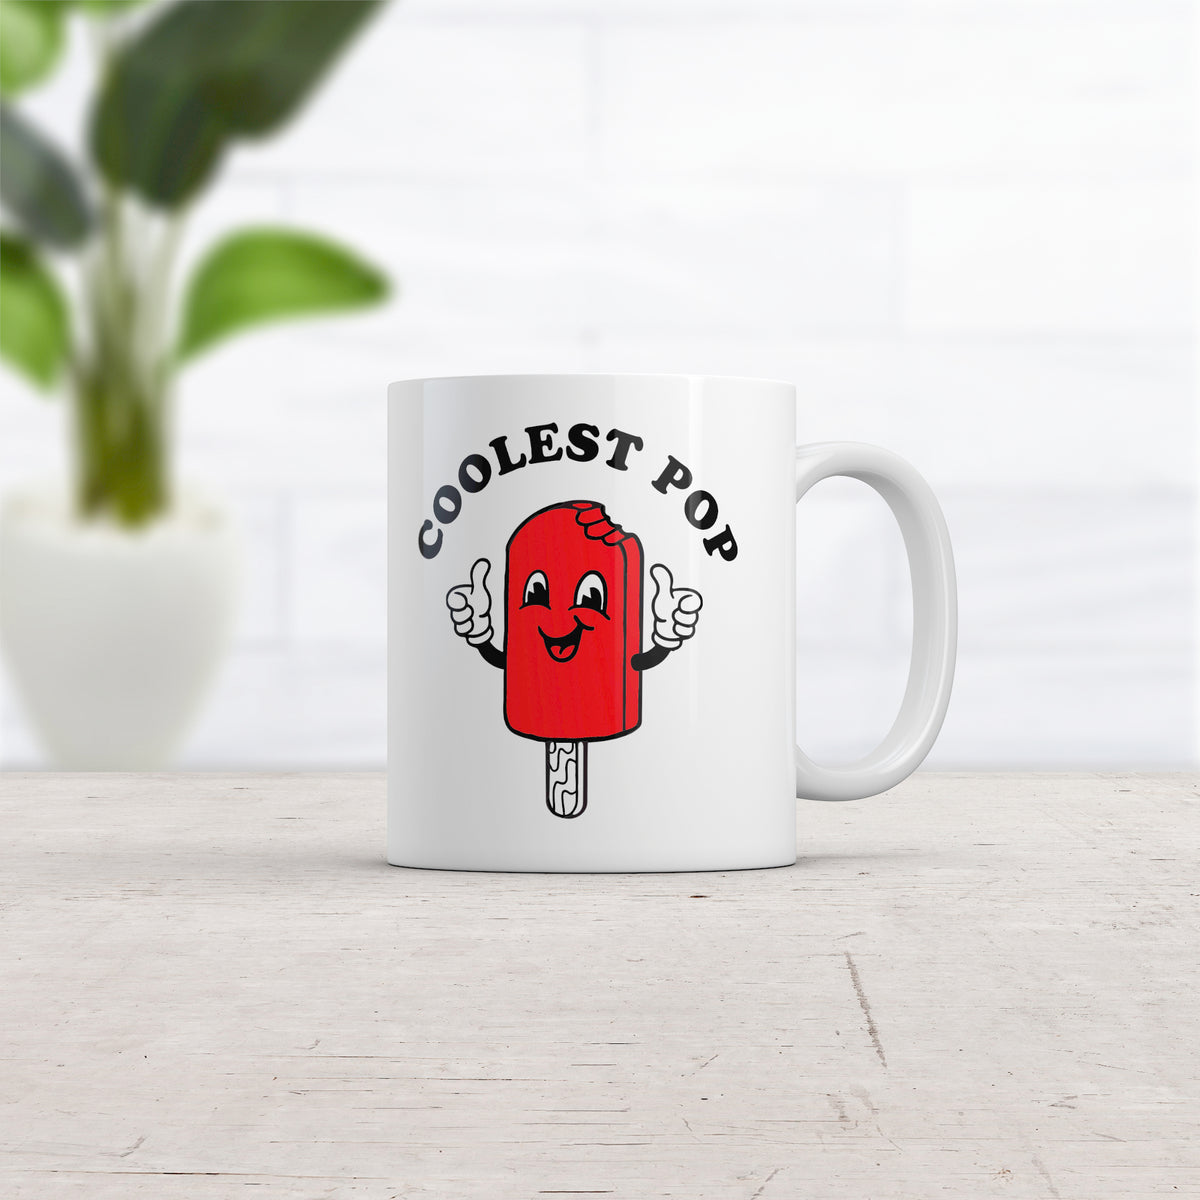 Coolest Pop Mug